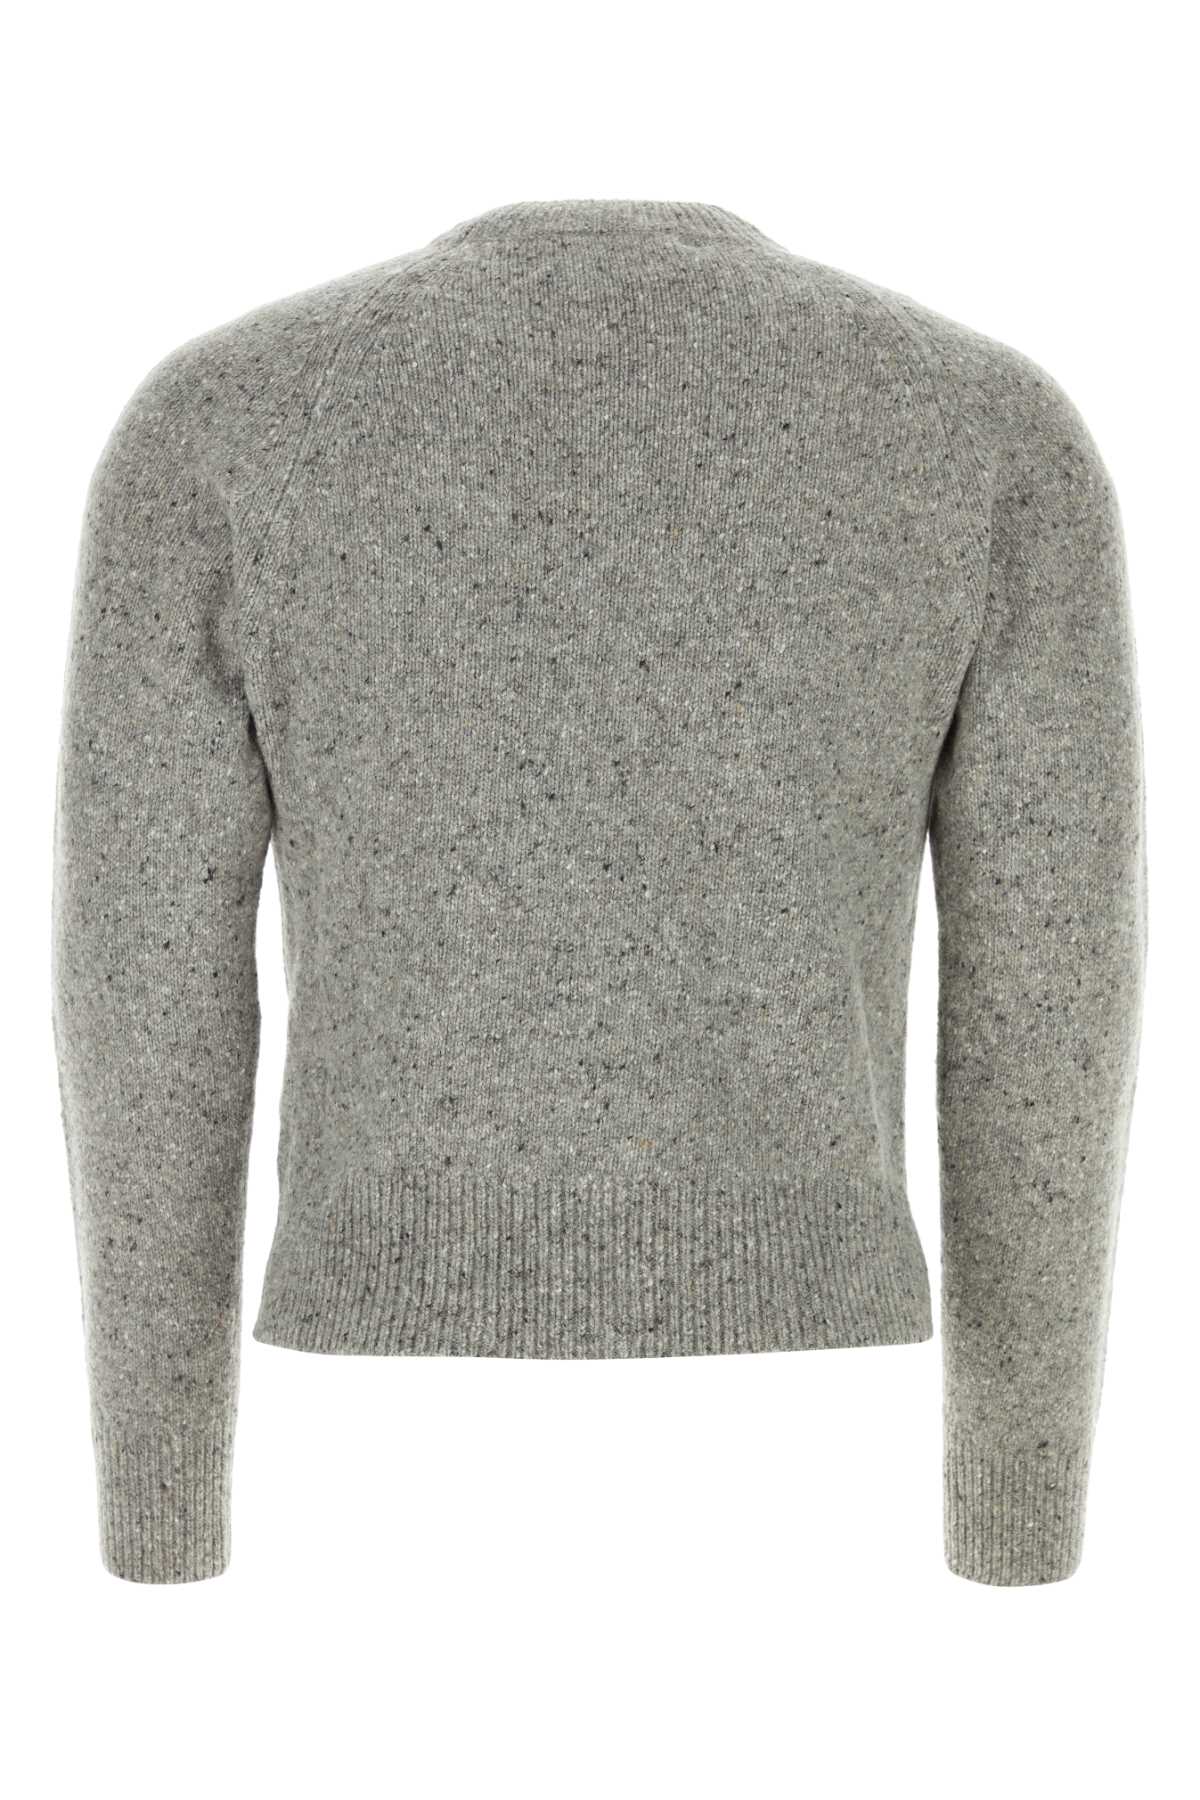 Shop Ami Alexandre Mattiussi Melange Grey Wool Blend Sweater In Lightheathergrey